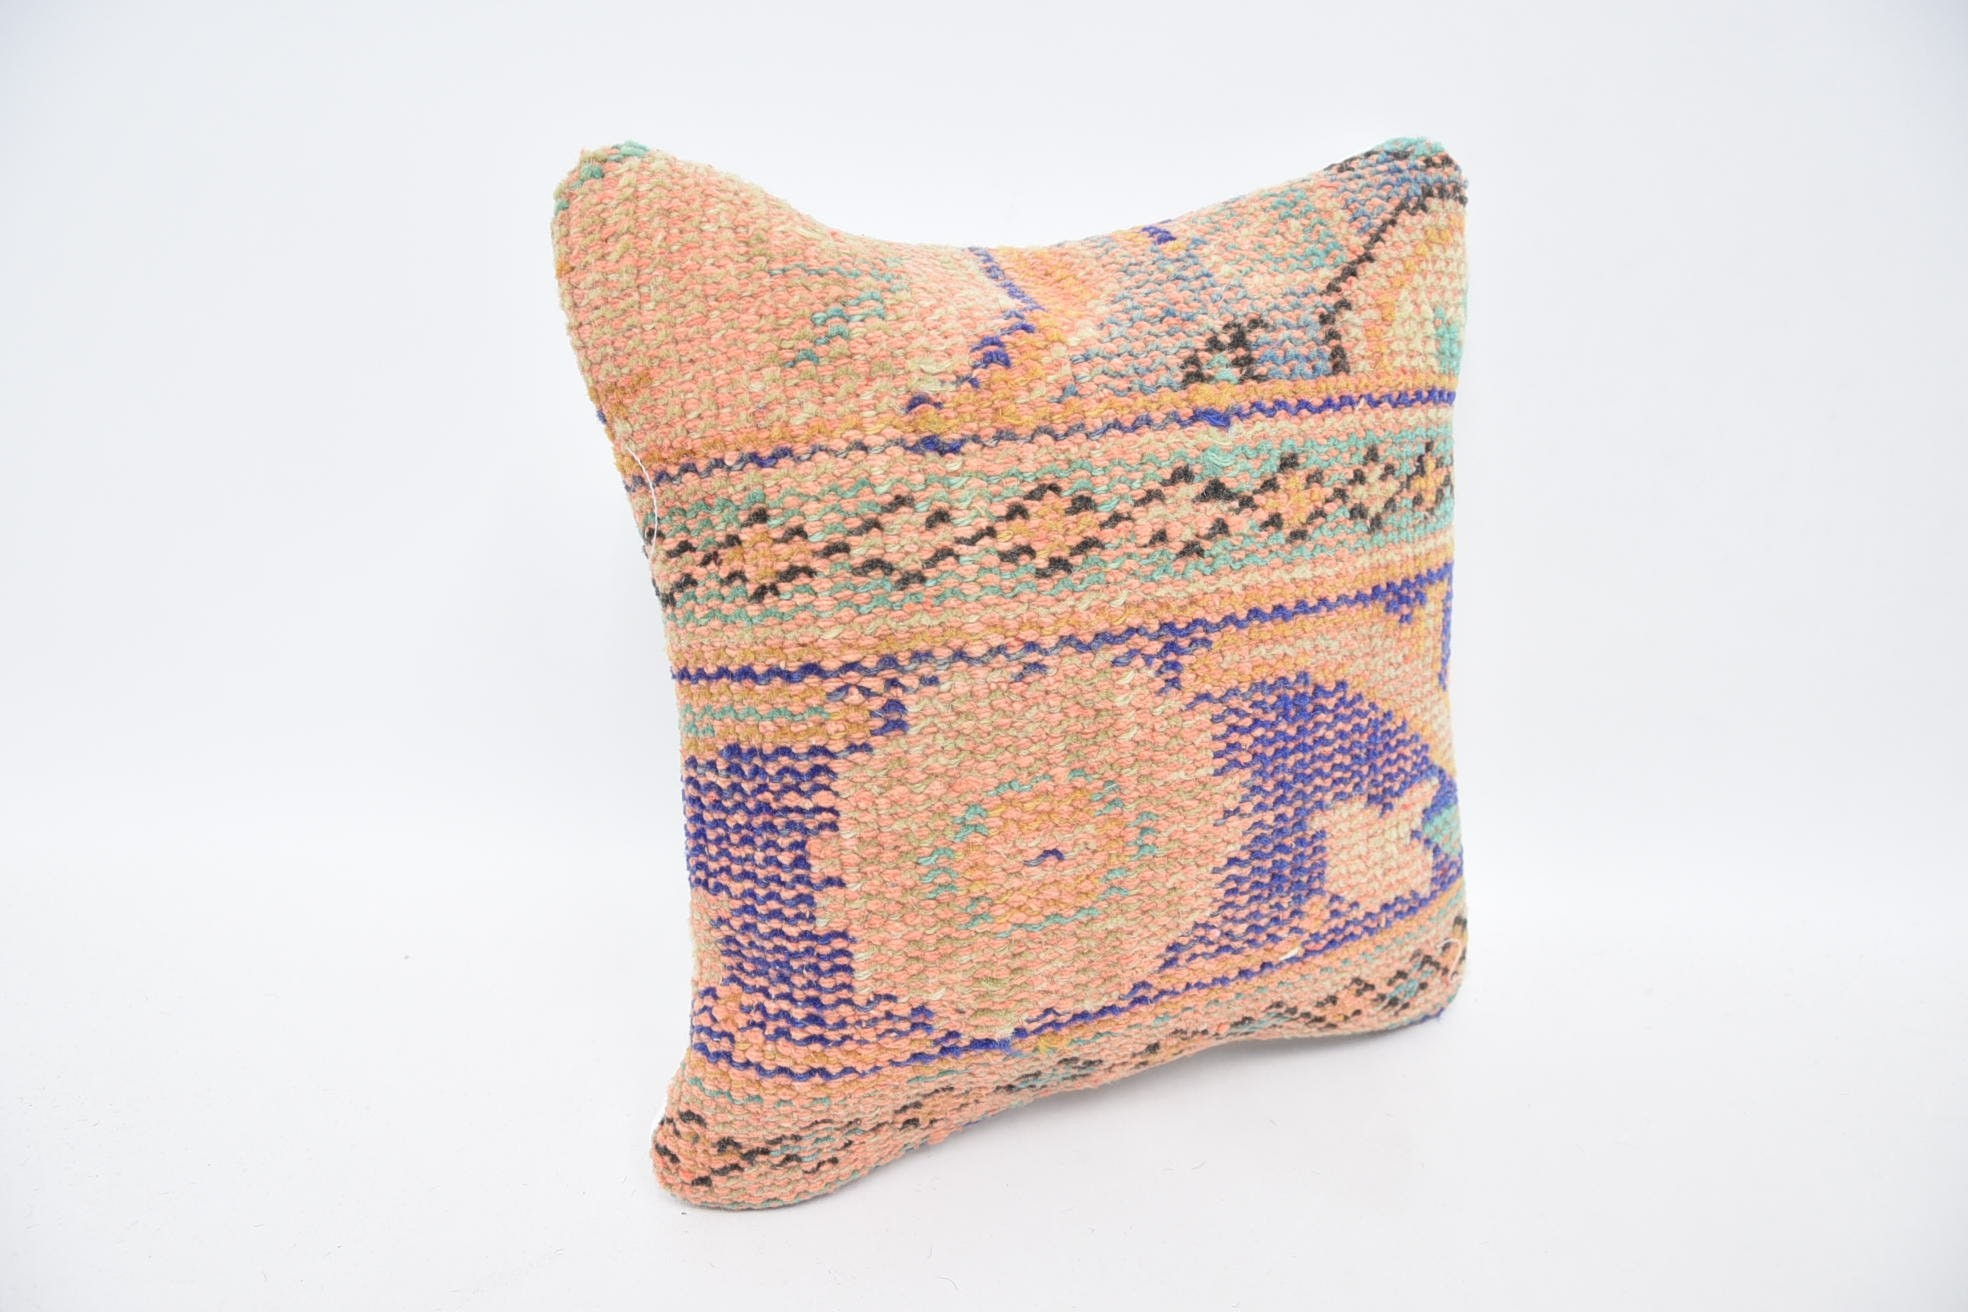 12"x12" Orange Cushion Cover, Chair Pillow, Boho Pillow Sham Cover, Ethnical Kilim Rug Pillow, Vintage Kilim Pillow